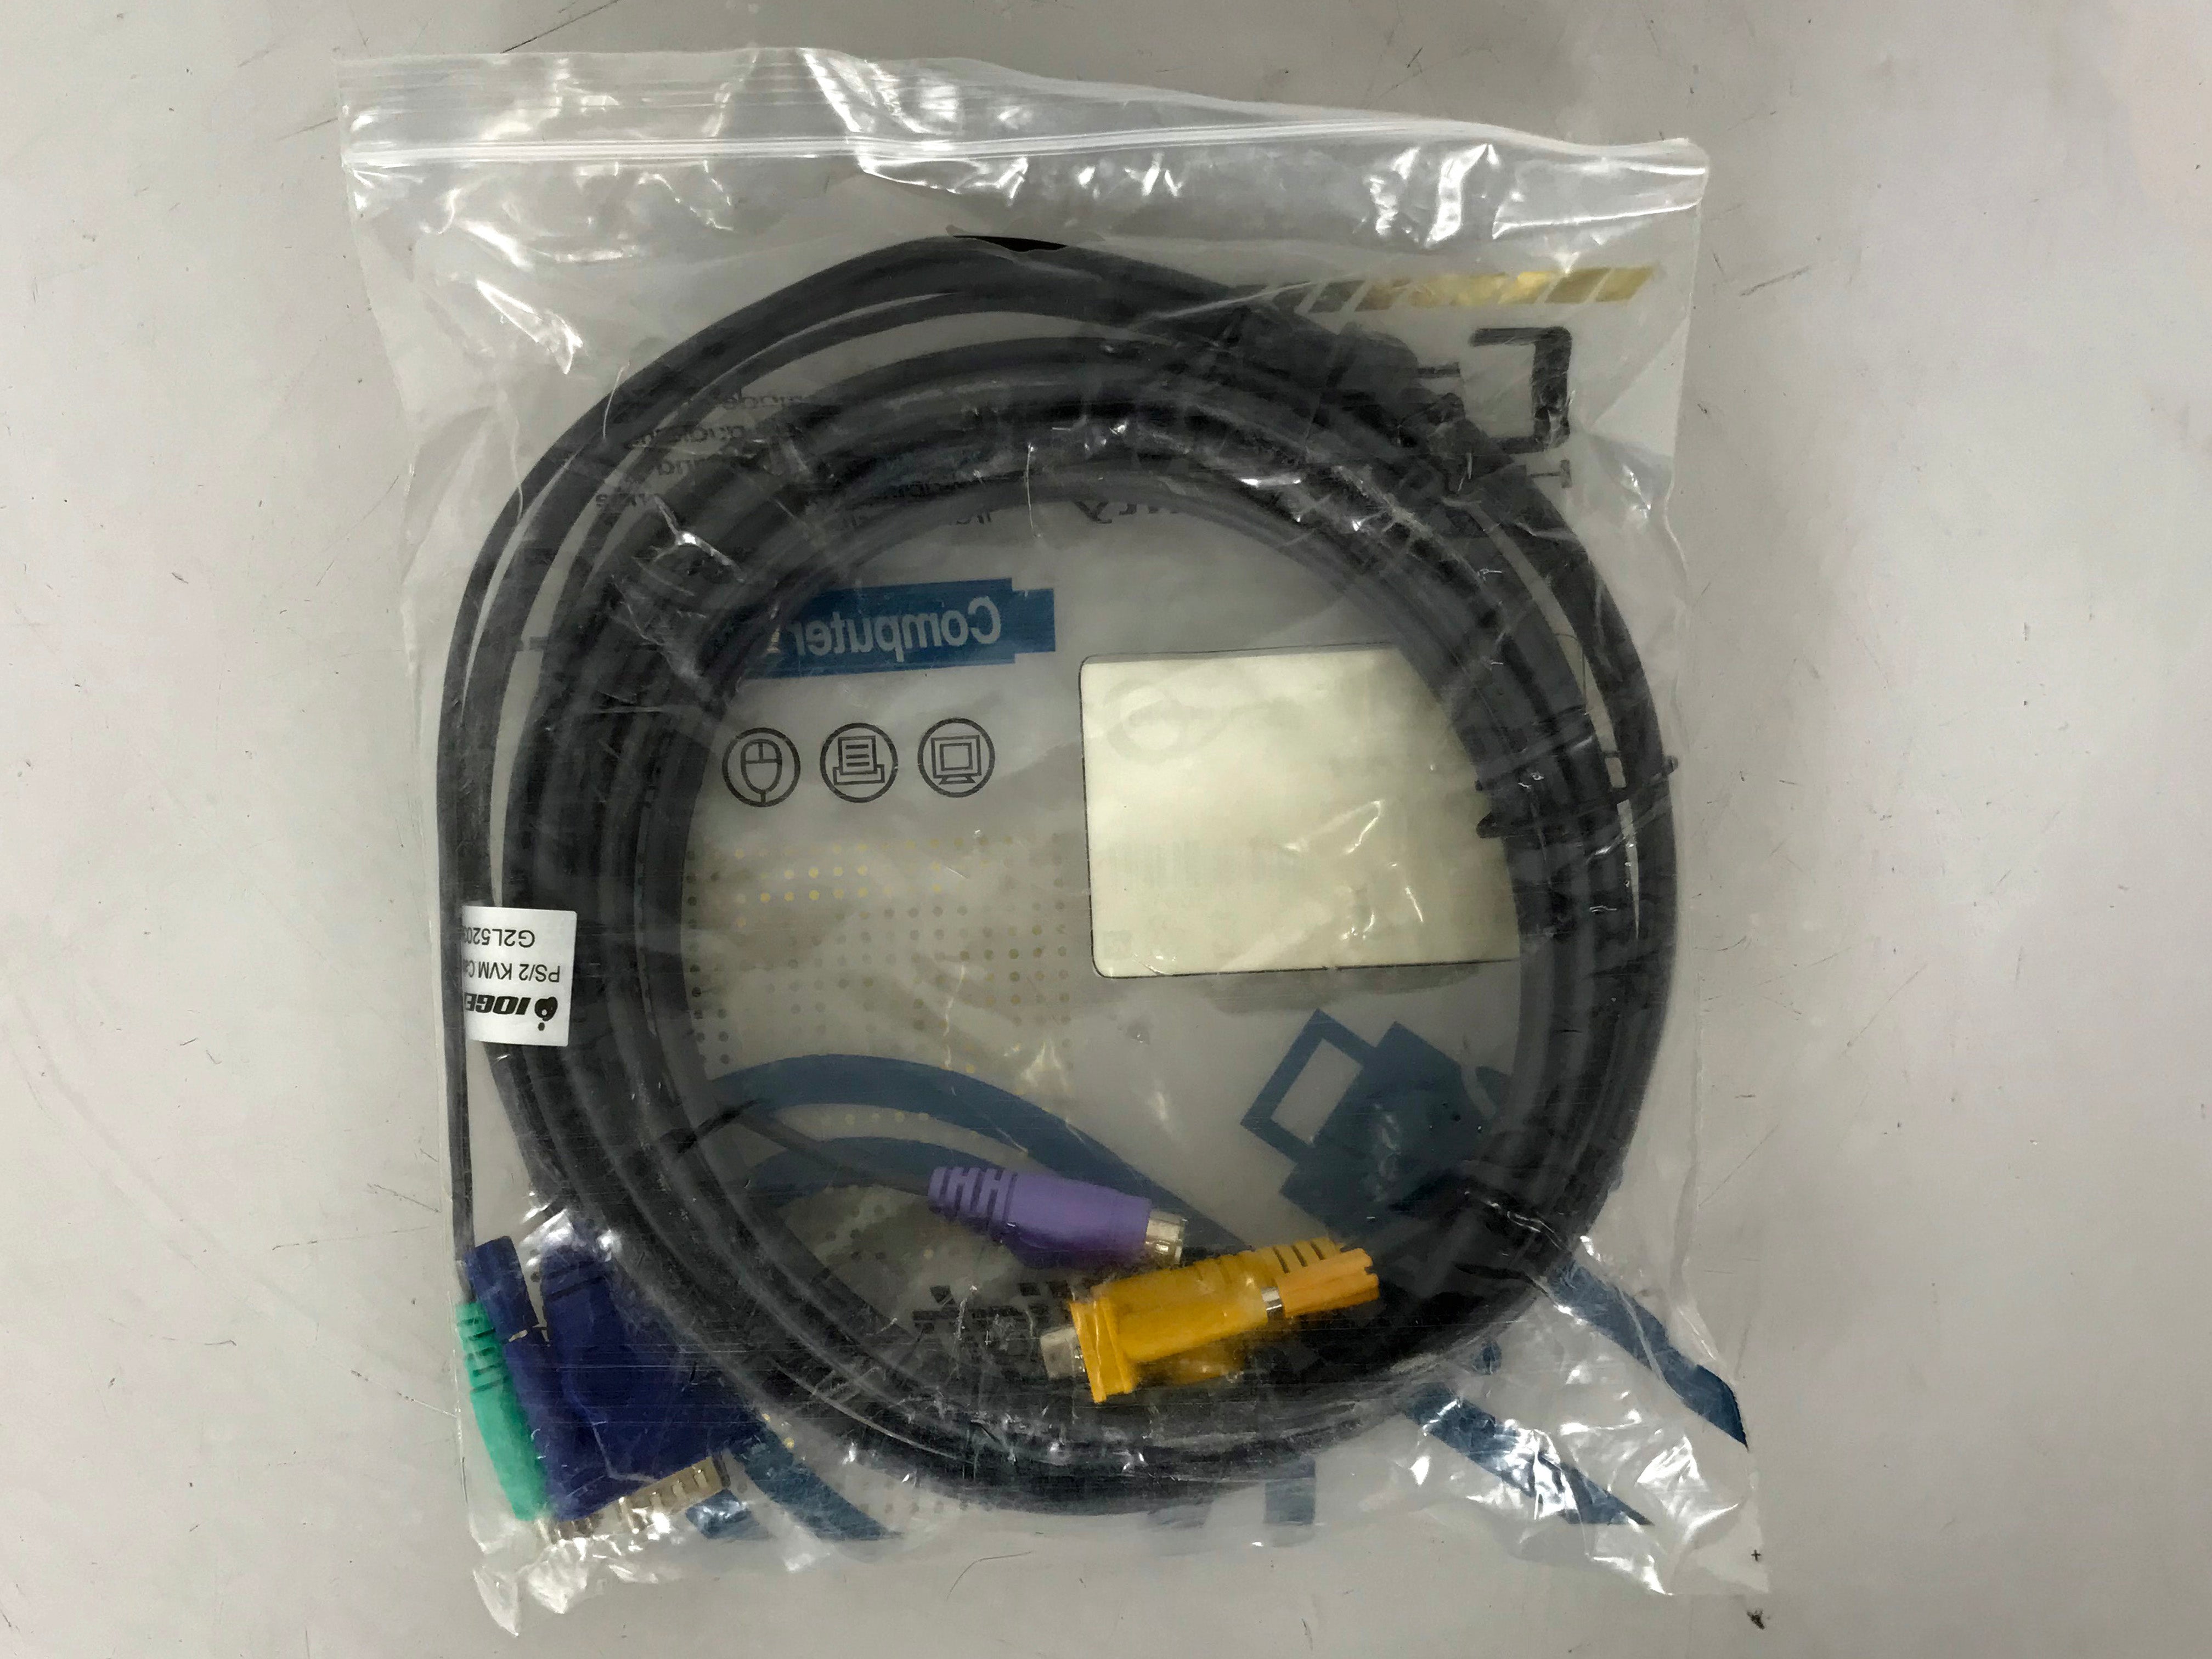 IOGEAR G2L5203P 10' (3 m) PS/2 KVM Cable